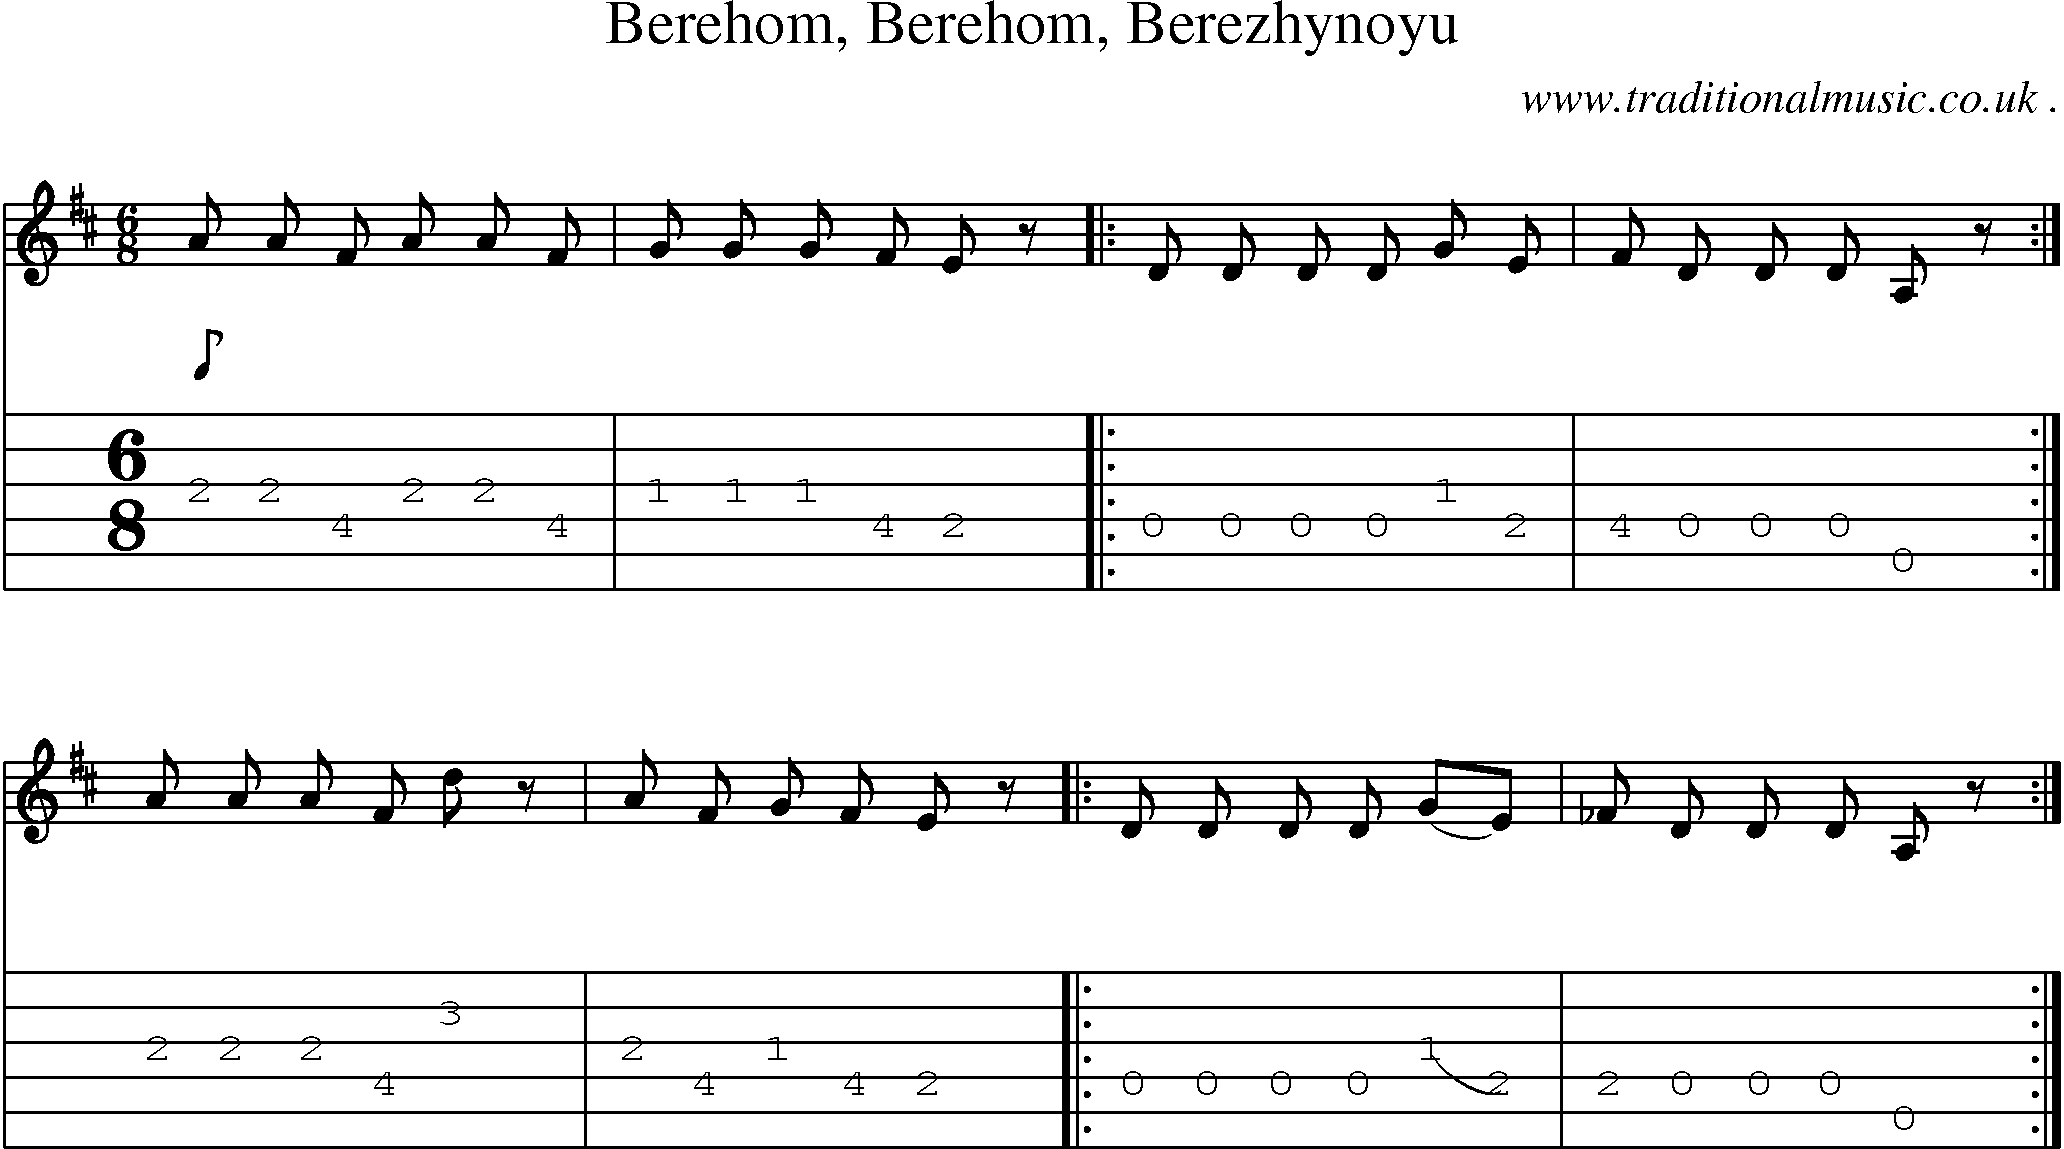 Sheet-Music and Guitar Tabs for Berehom Berehom Berezhynoyu